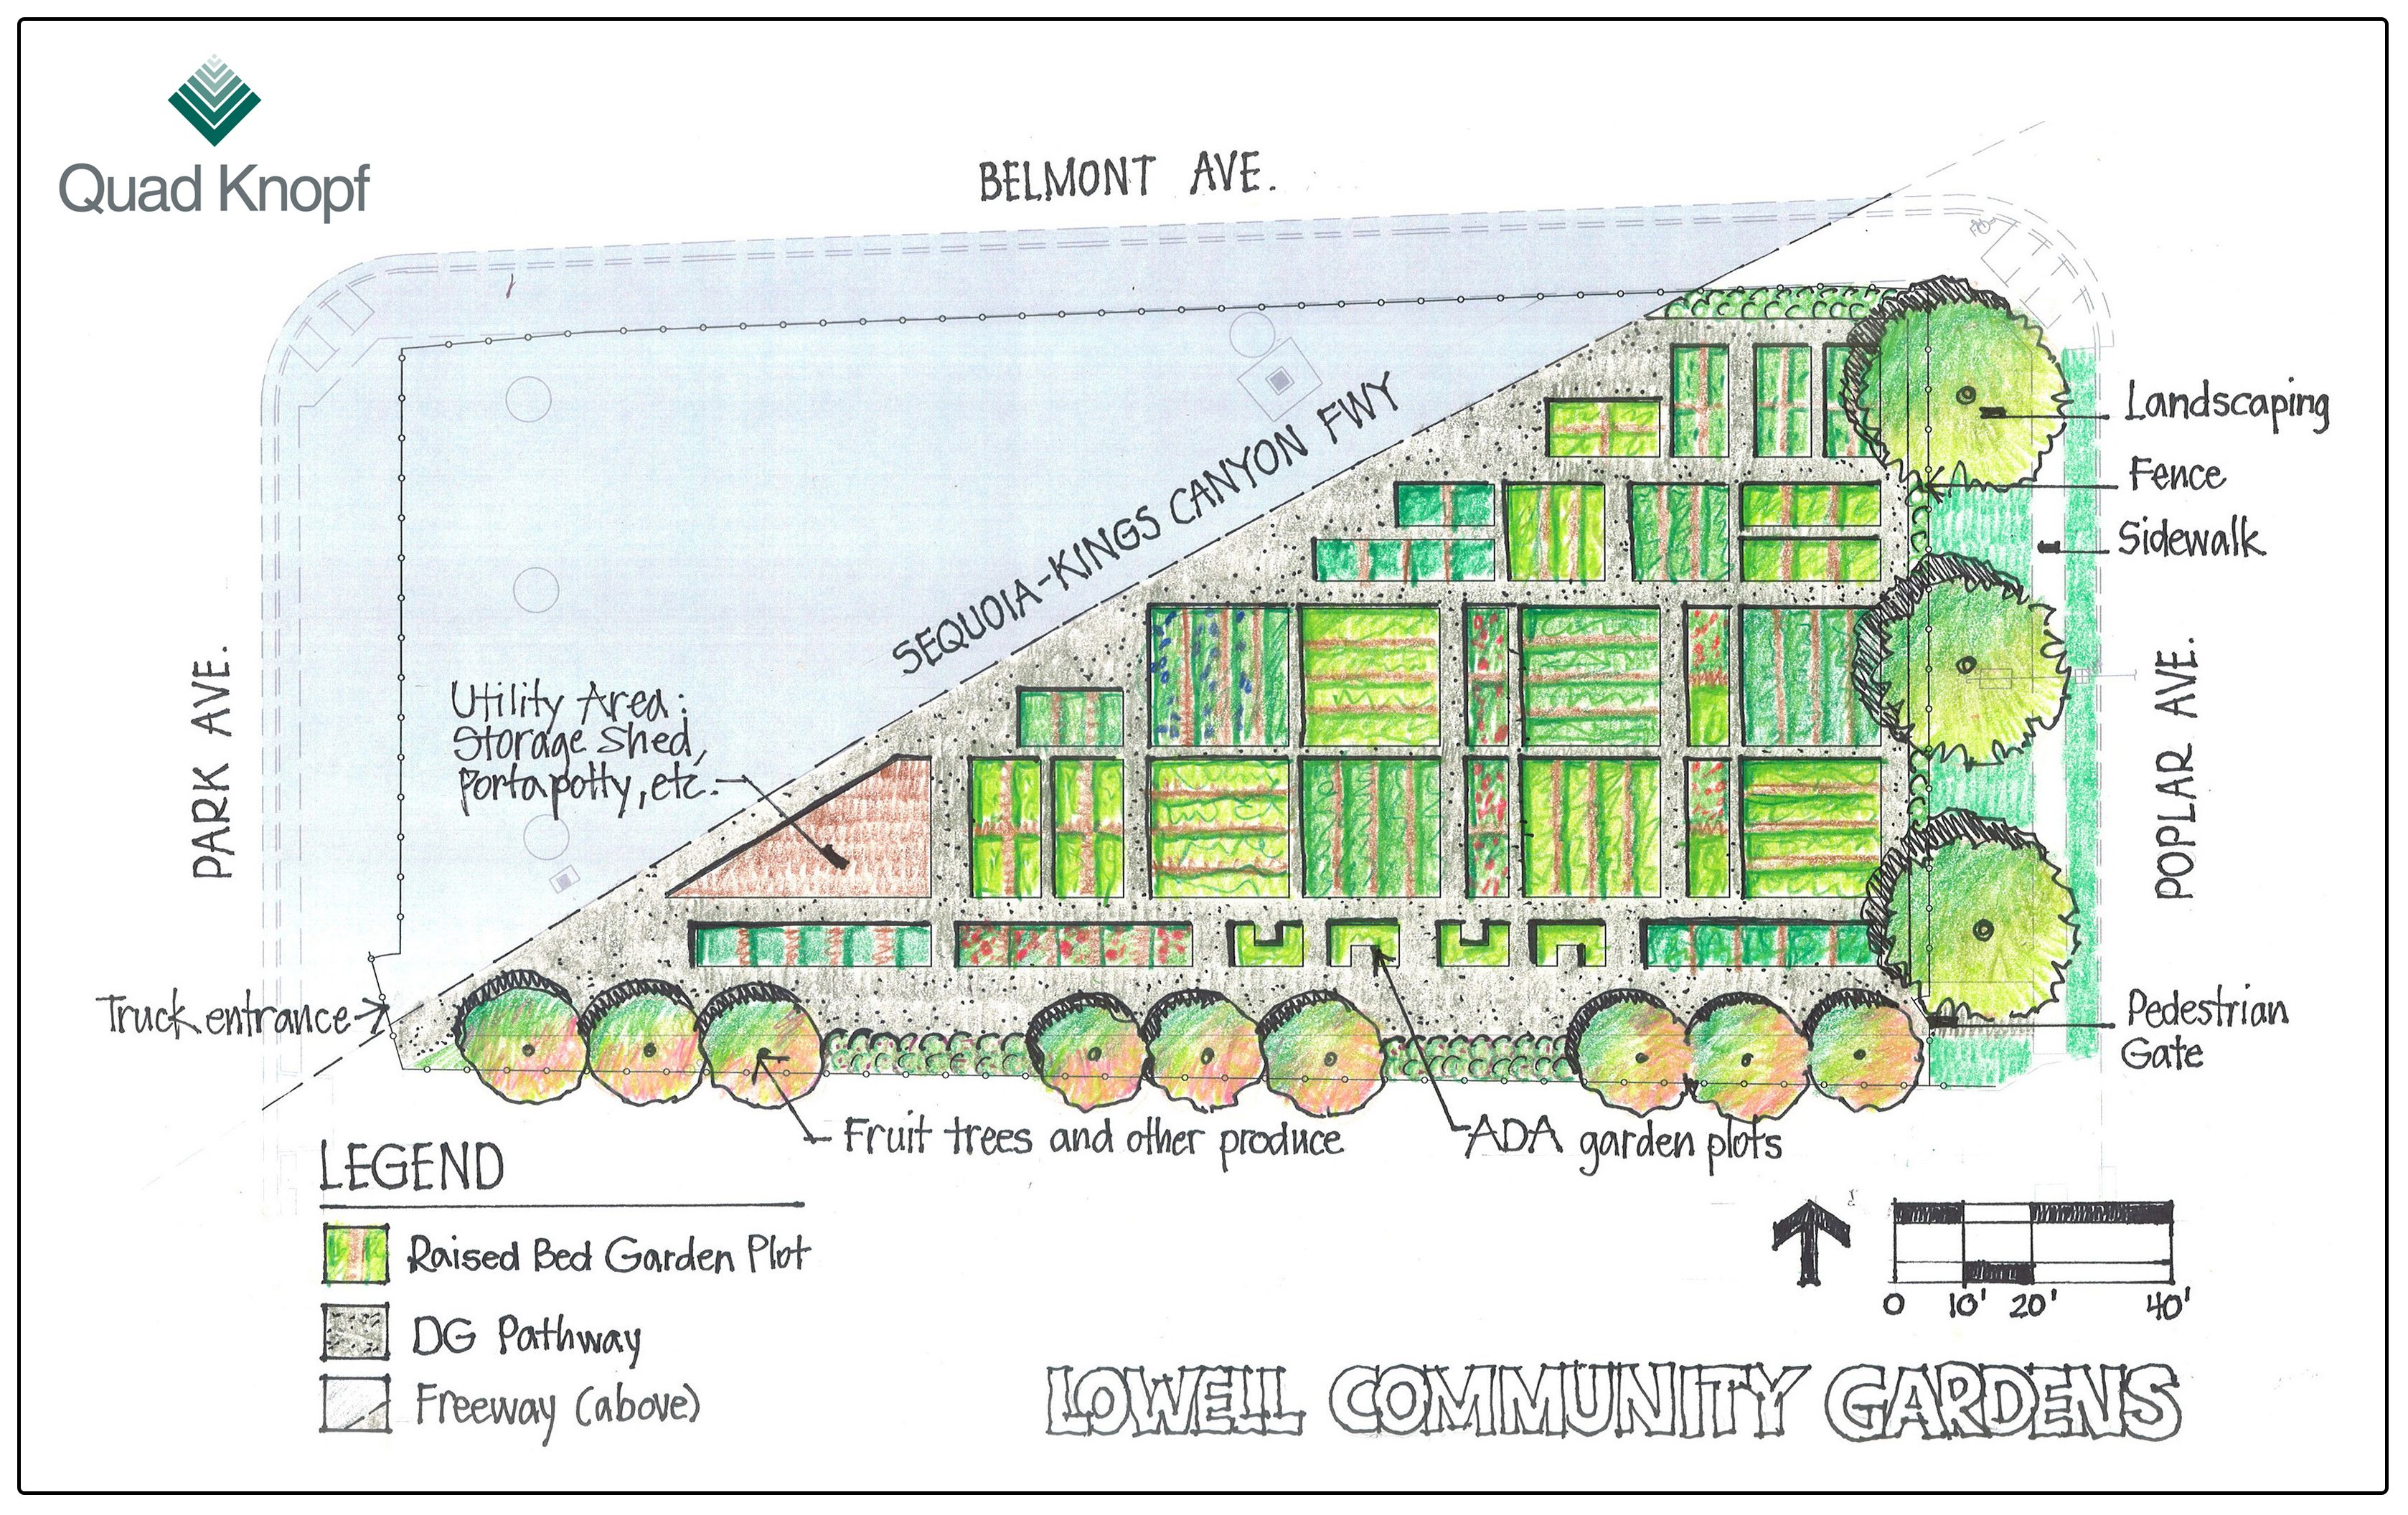 North Columbia Heights Green Garden Planning Layout